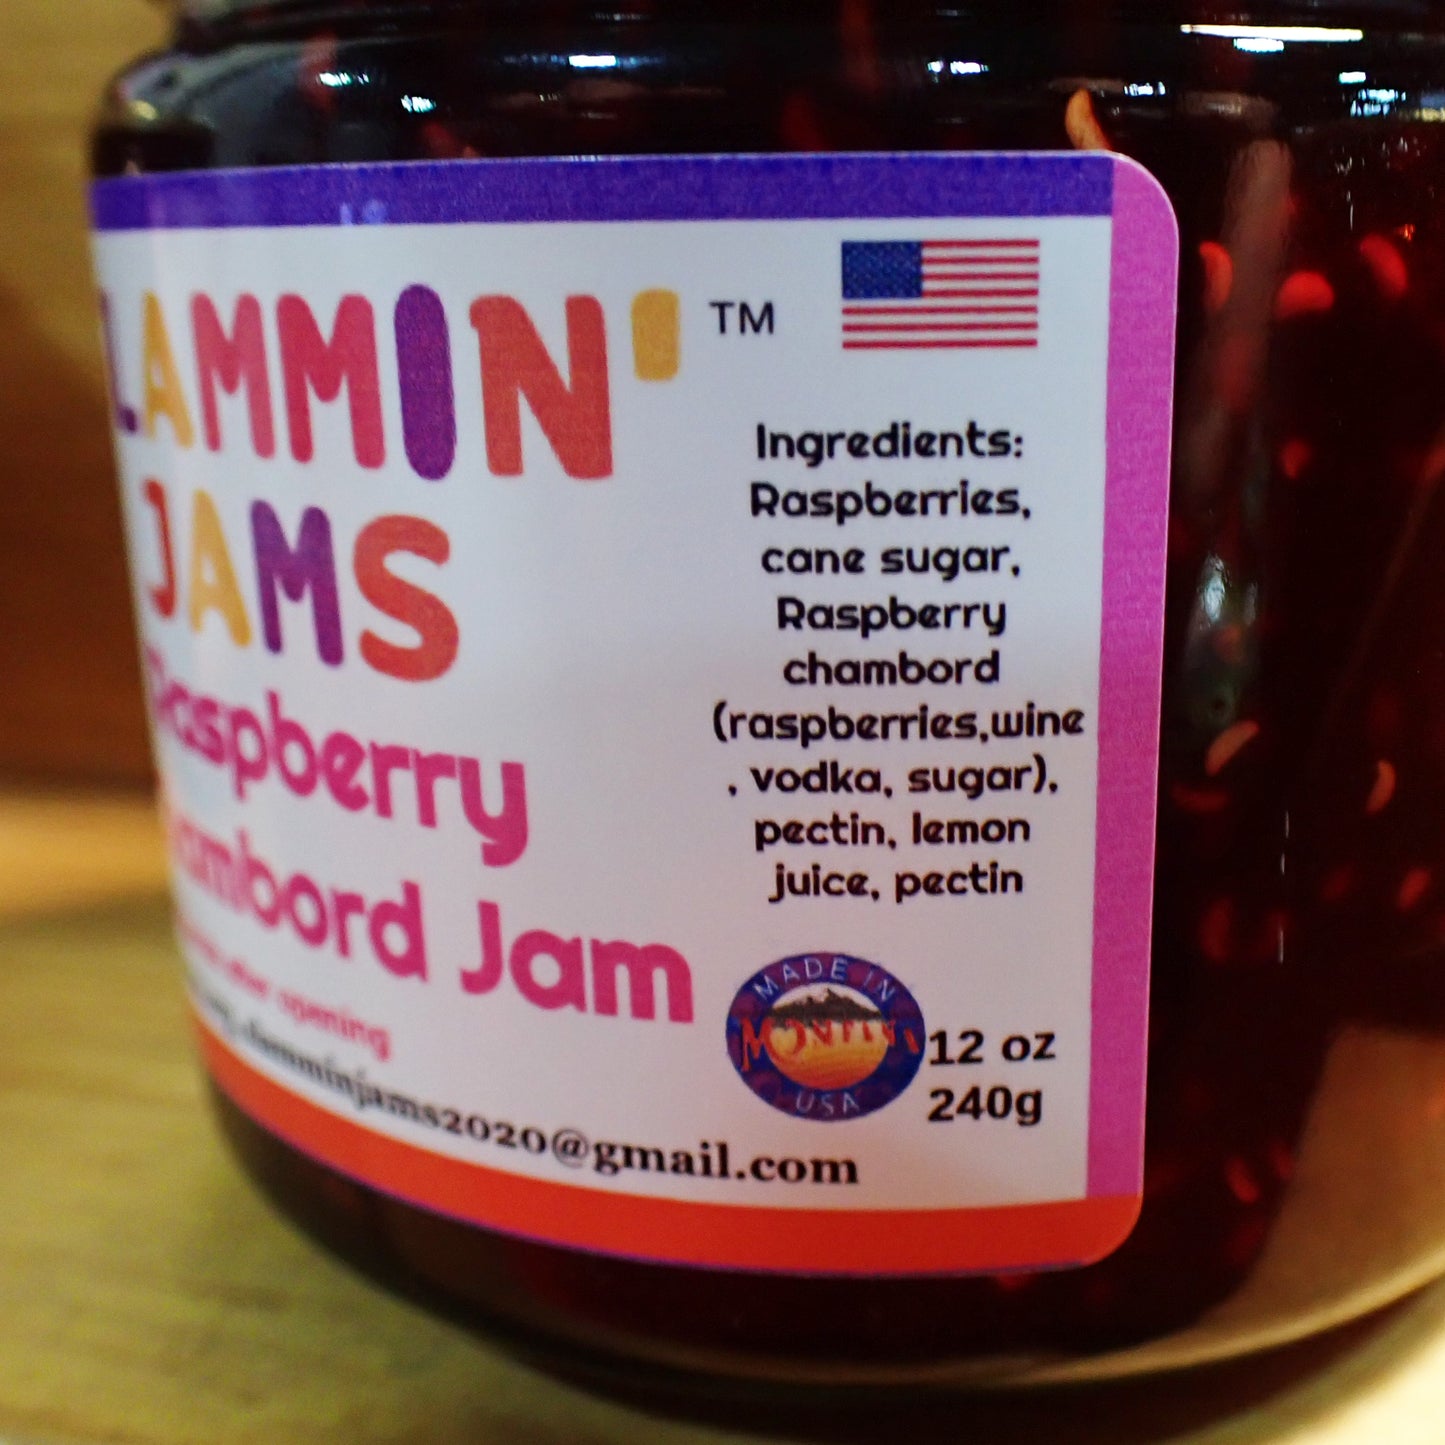 Raspberry Chambord Jam